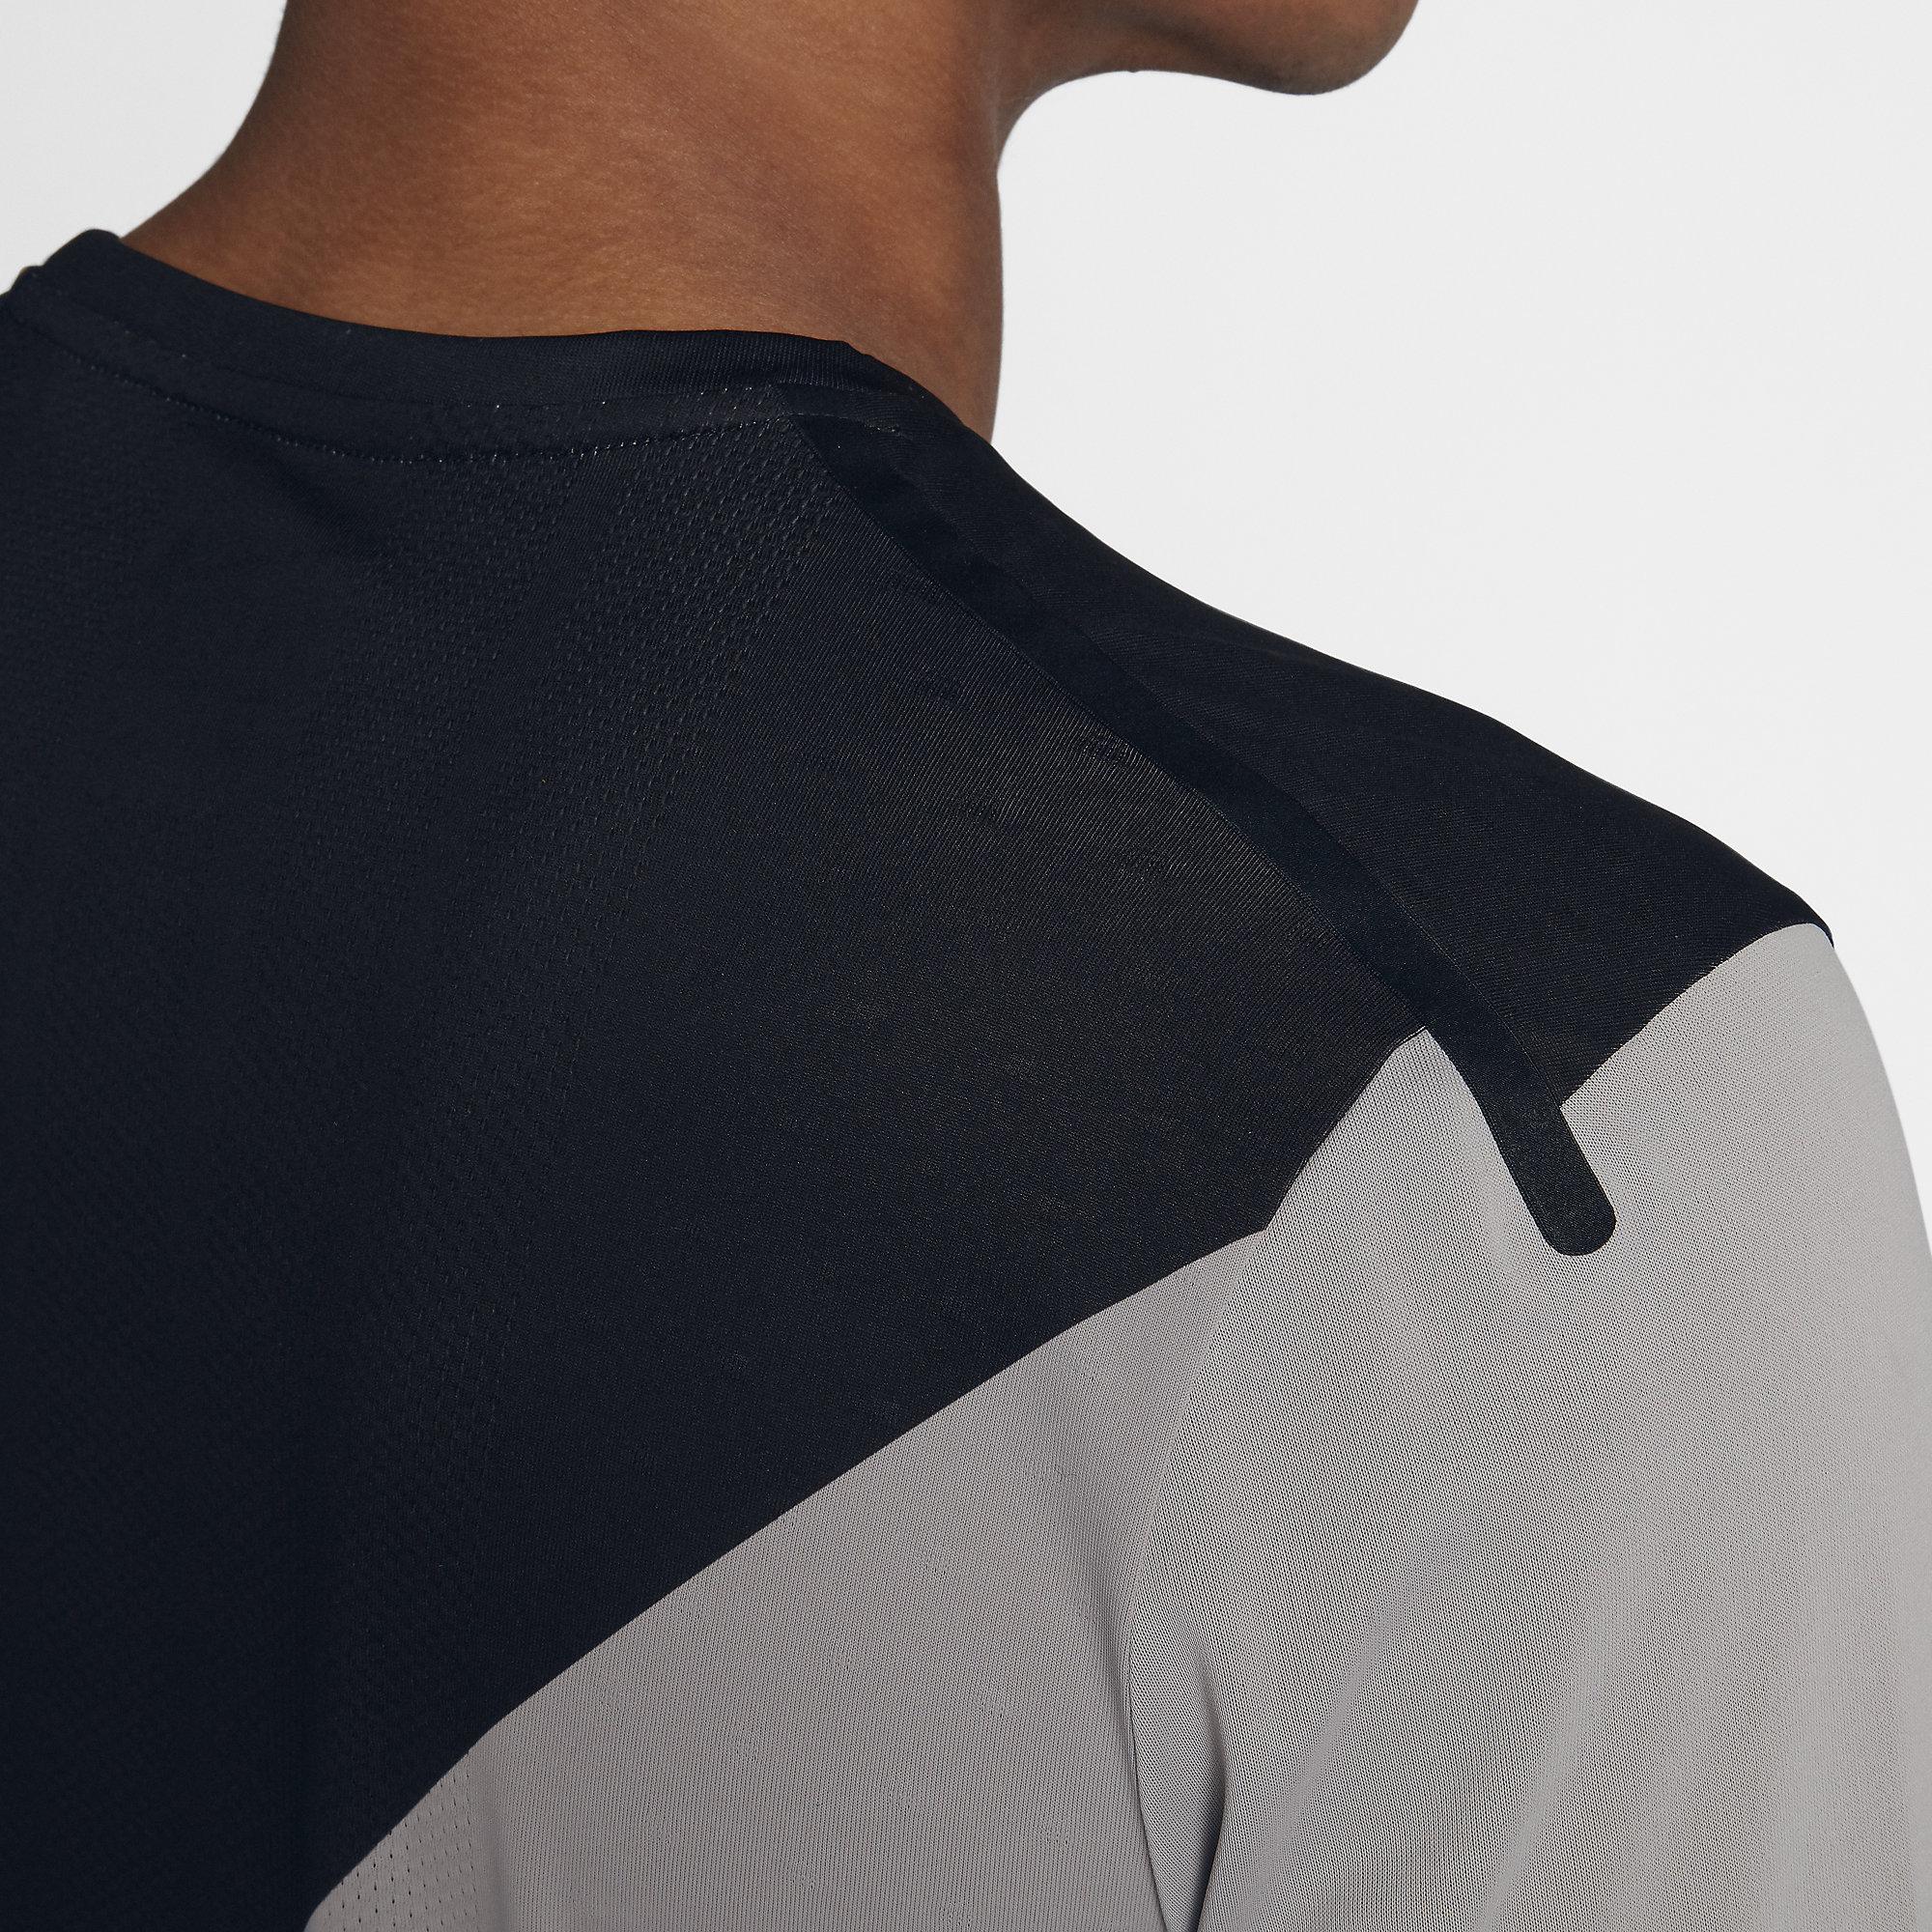 Nike Mens Zonal Cooling Challenger Tennis Top - Black/Grey - Tennisnuts.com